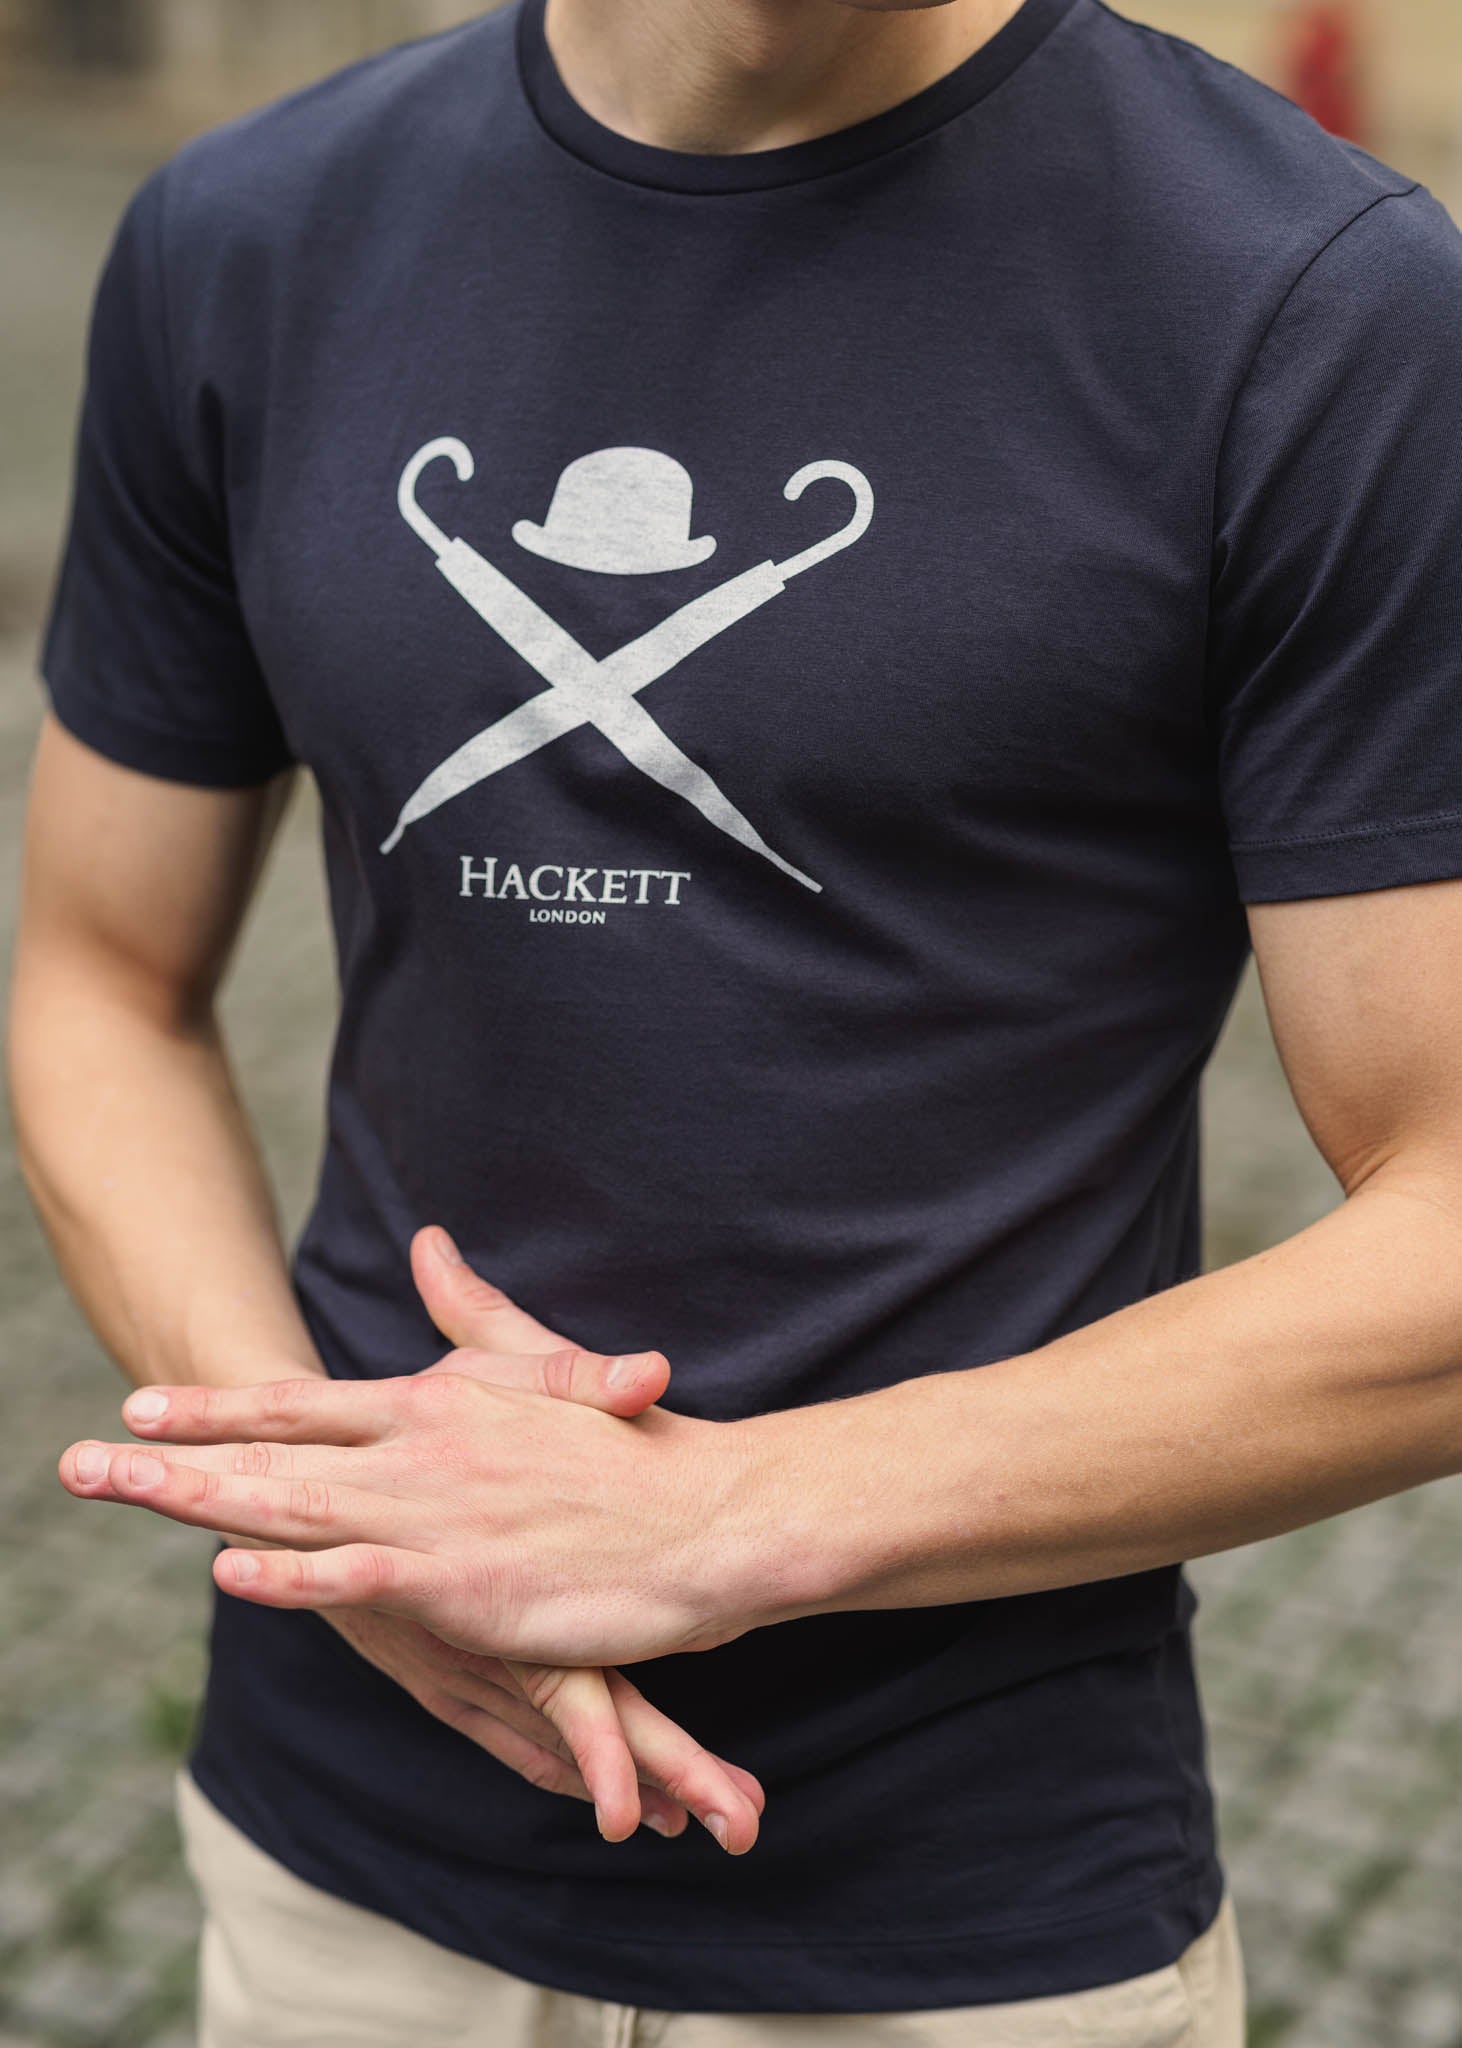 Hackett London T-shirts  Large logo t-shirt - dark navy 